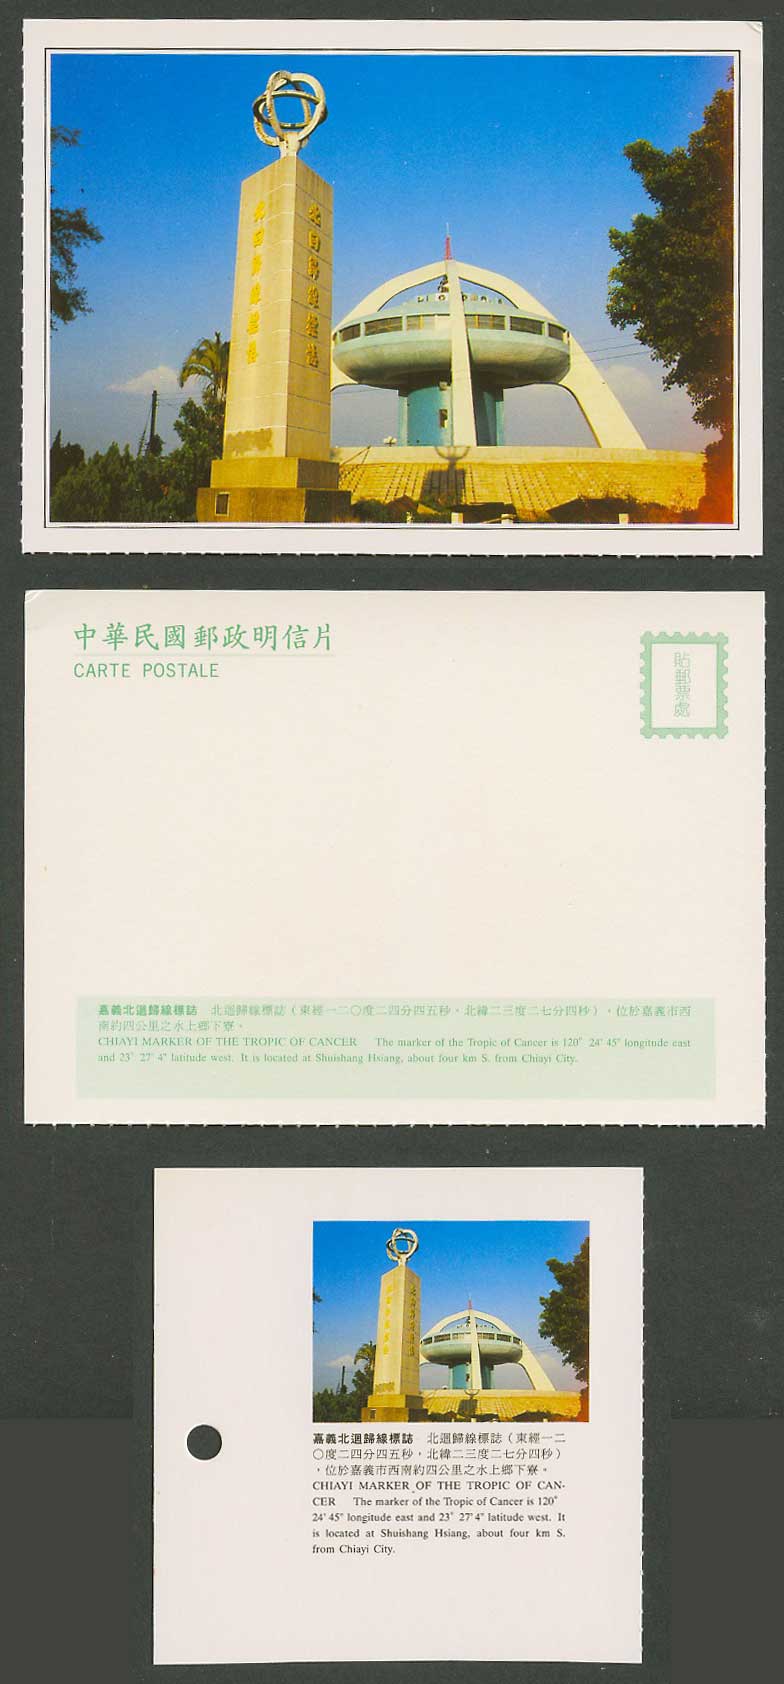 Taiwan Formosa China Postcard Chiayi Marker of The Tropic of Cancer 嘉義北迴歸線標誌 水上鄉